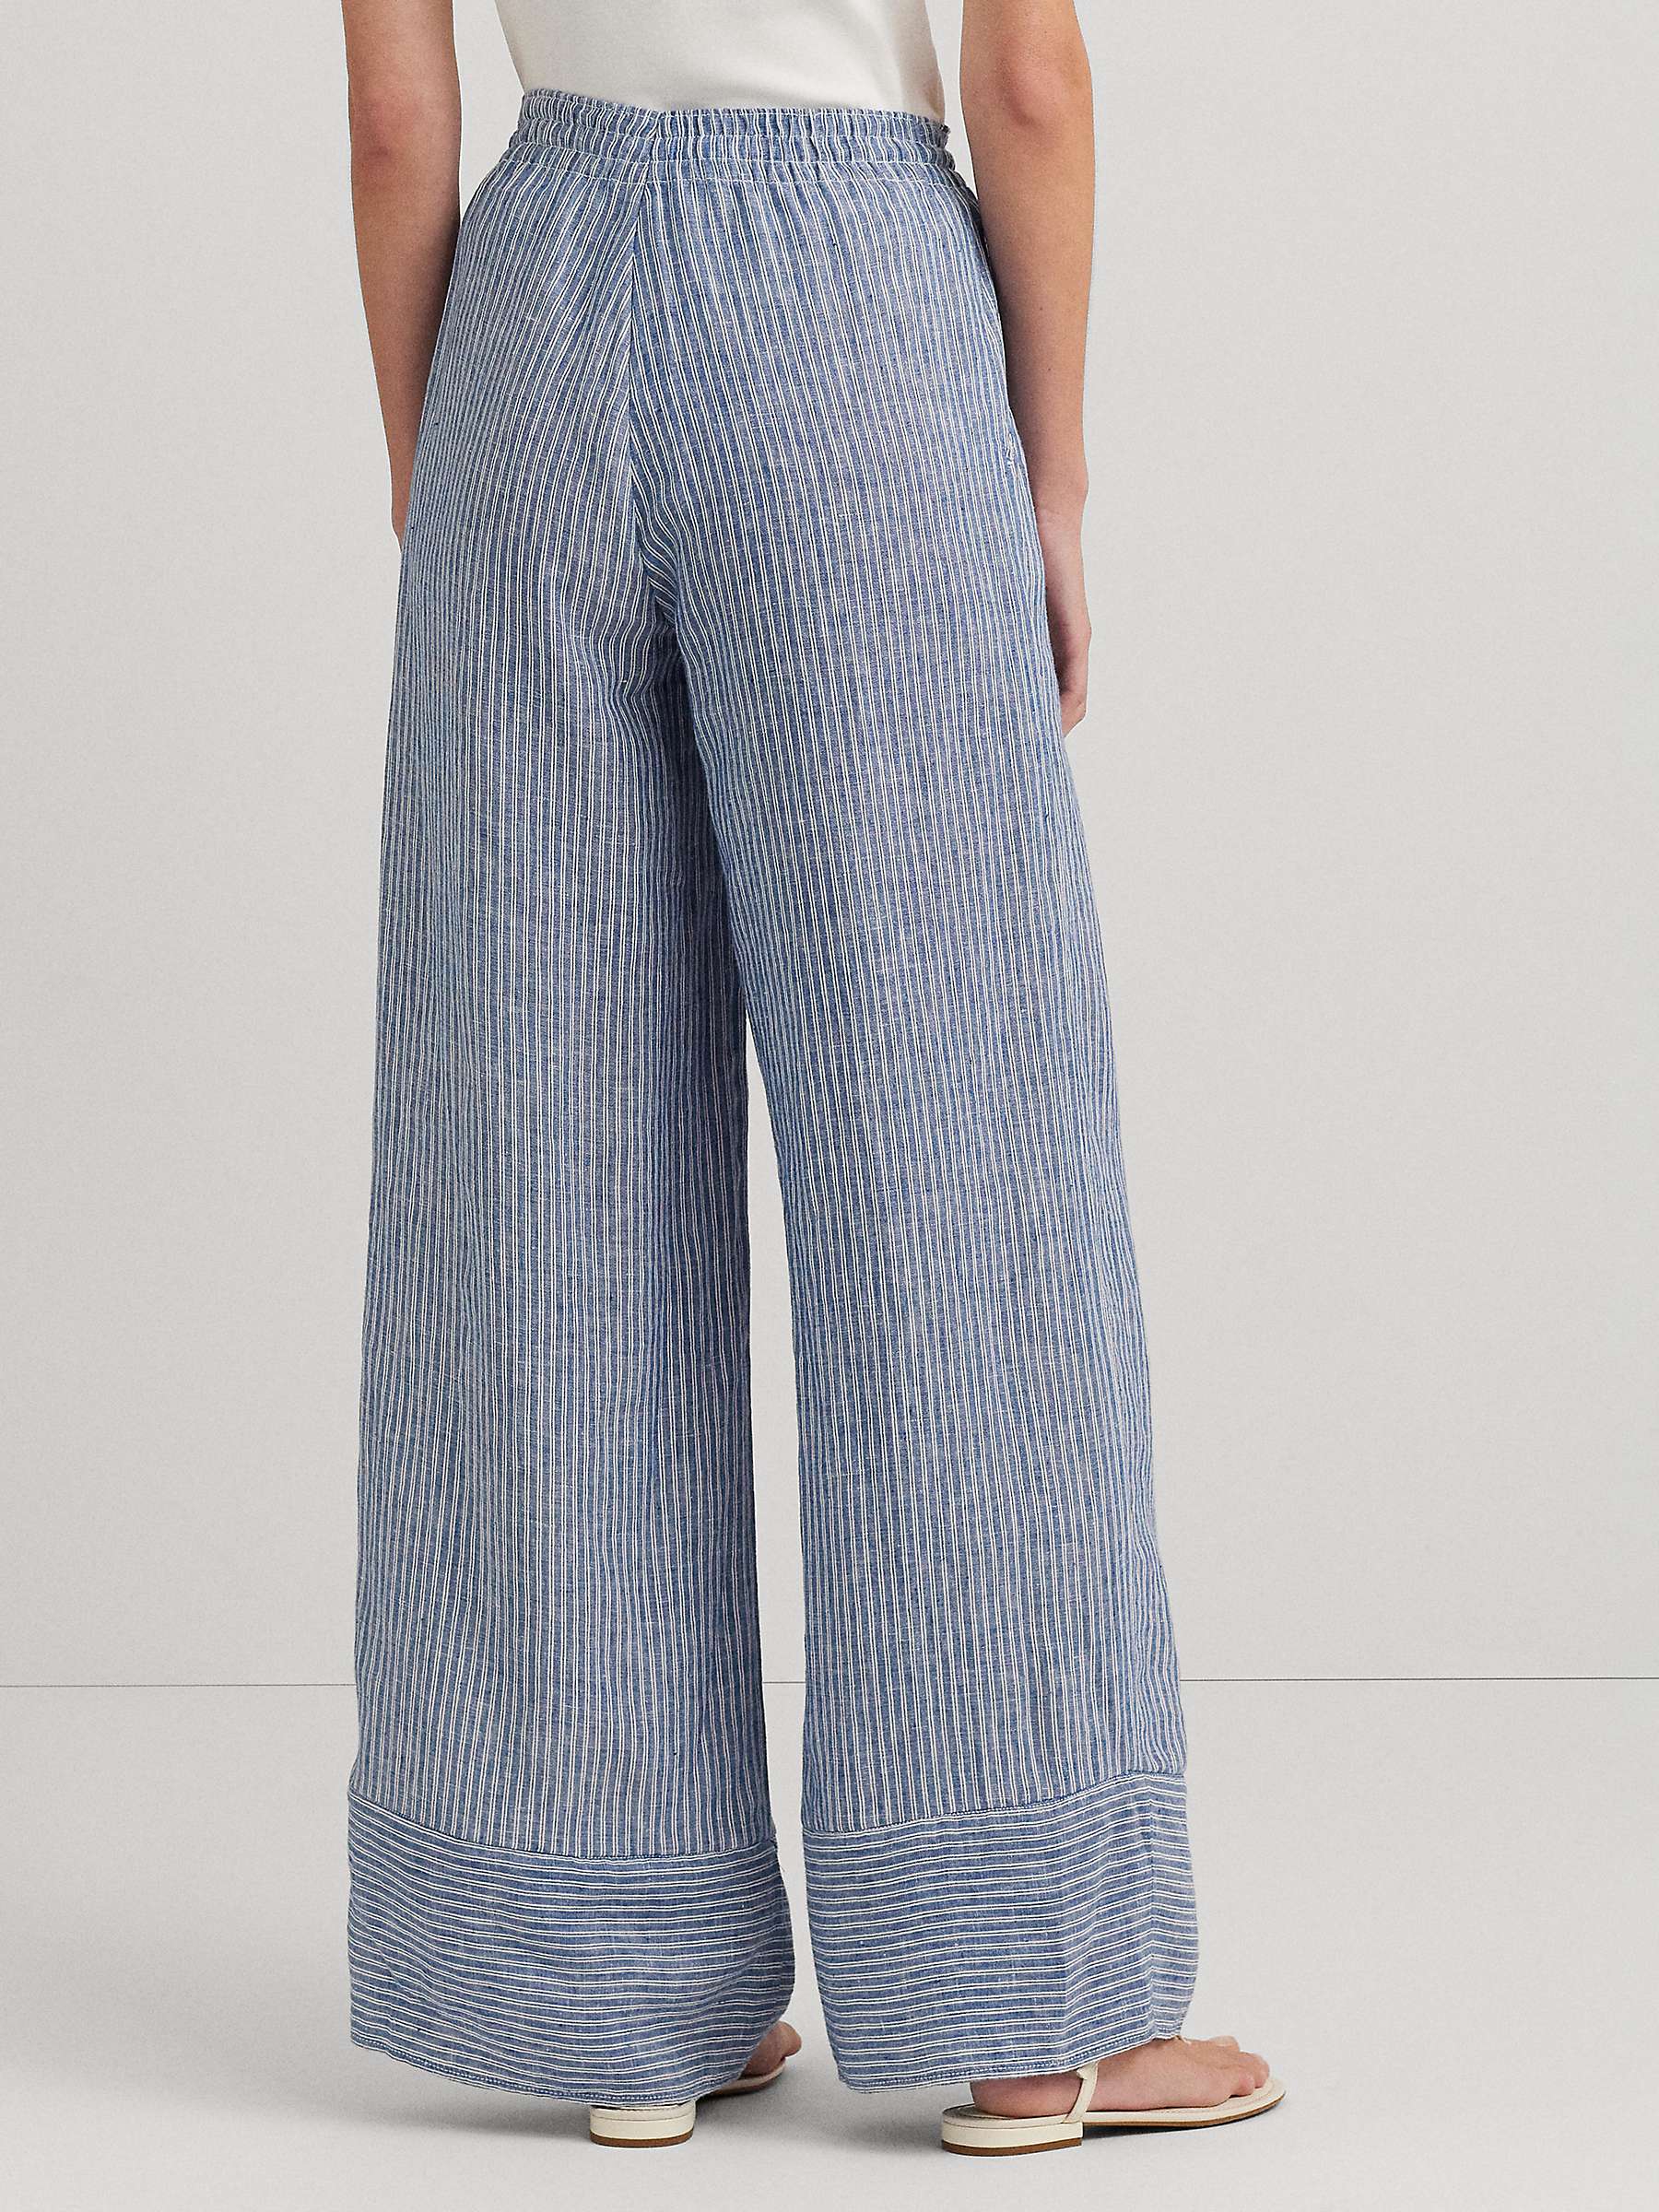 Buy Lauren Ralph Lauren Ziakash Stripe Linen Blend Trousers, Blue/Multi Online at johnlewis.com